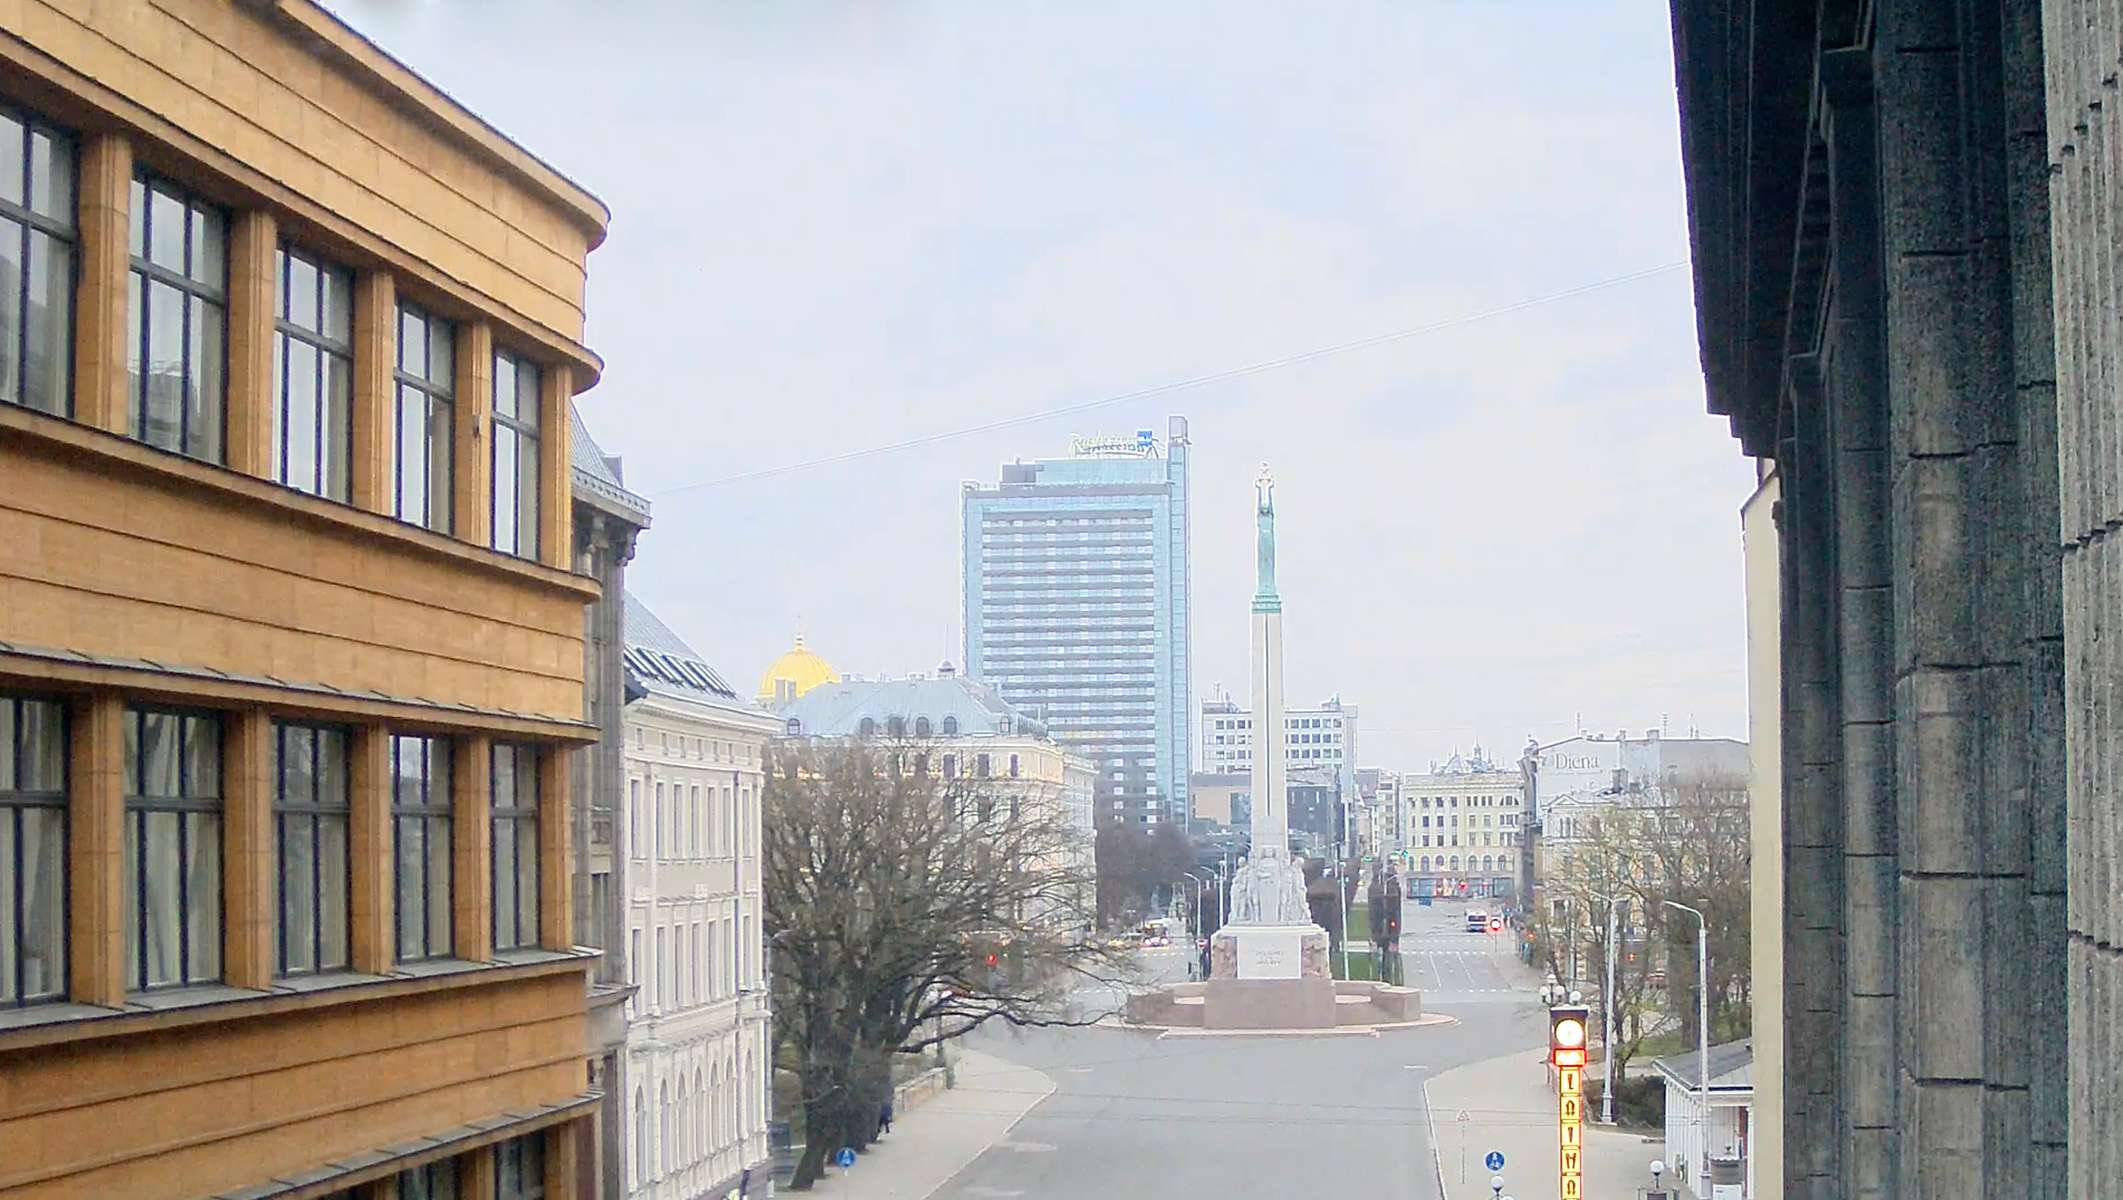 Freedom Monument, Riga, Latvia. April 12, 2020, 8:32:30 PM PST